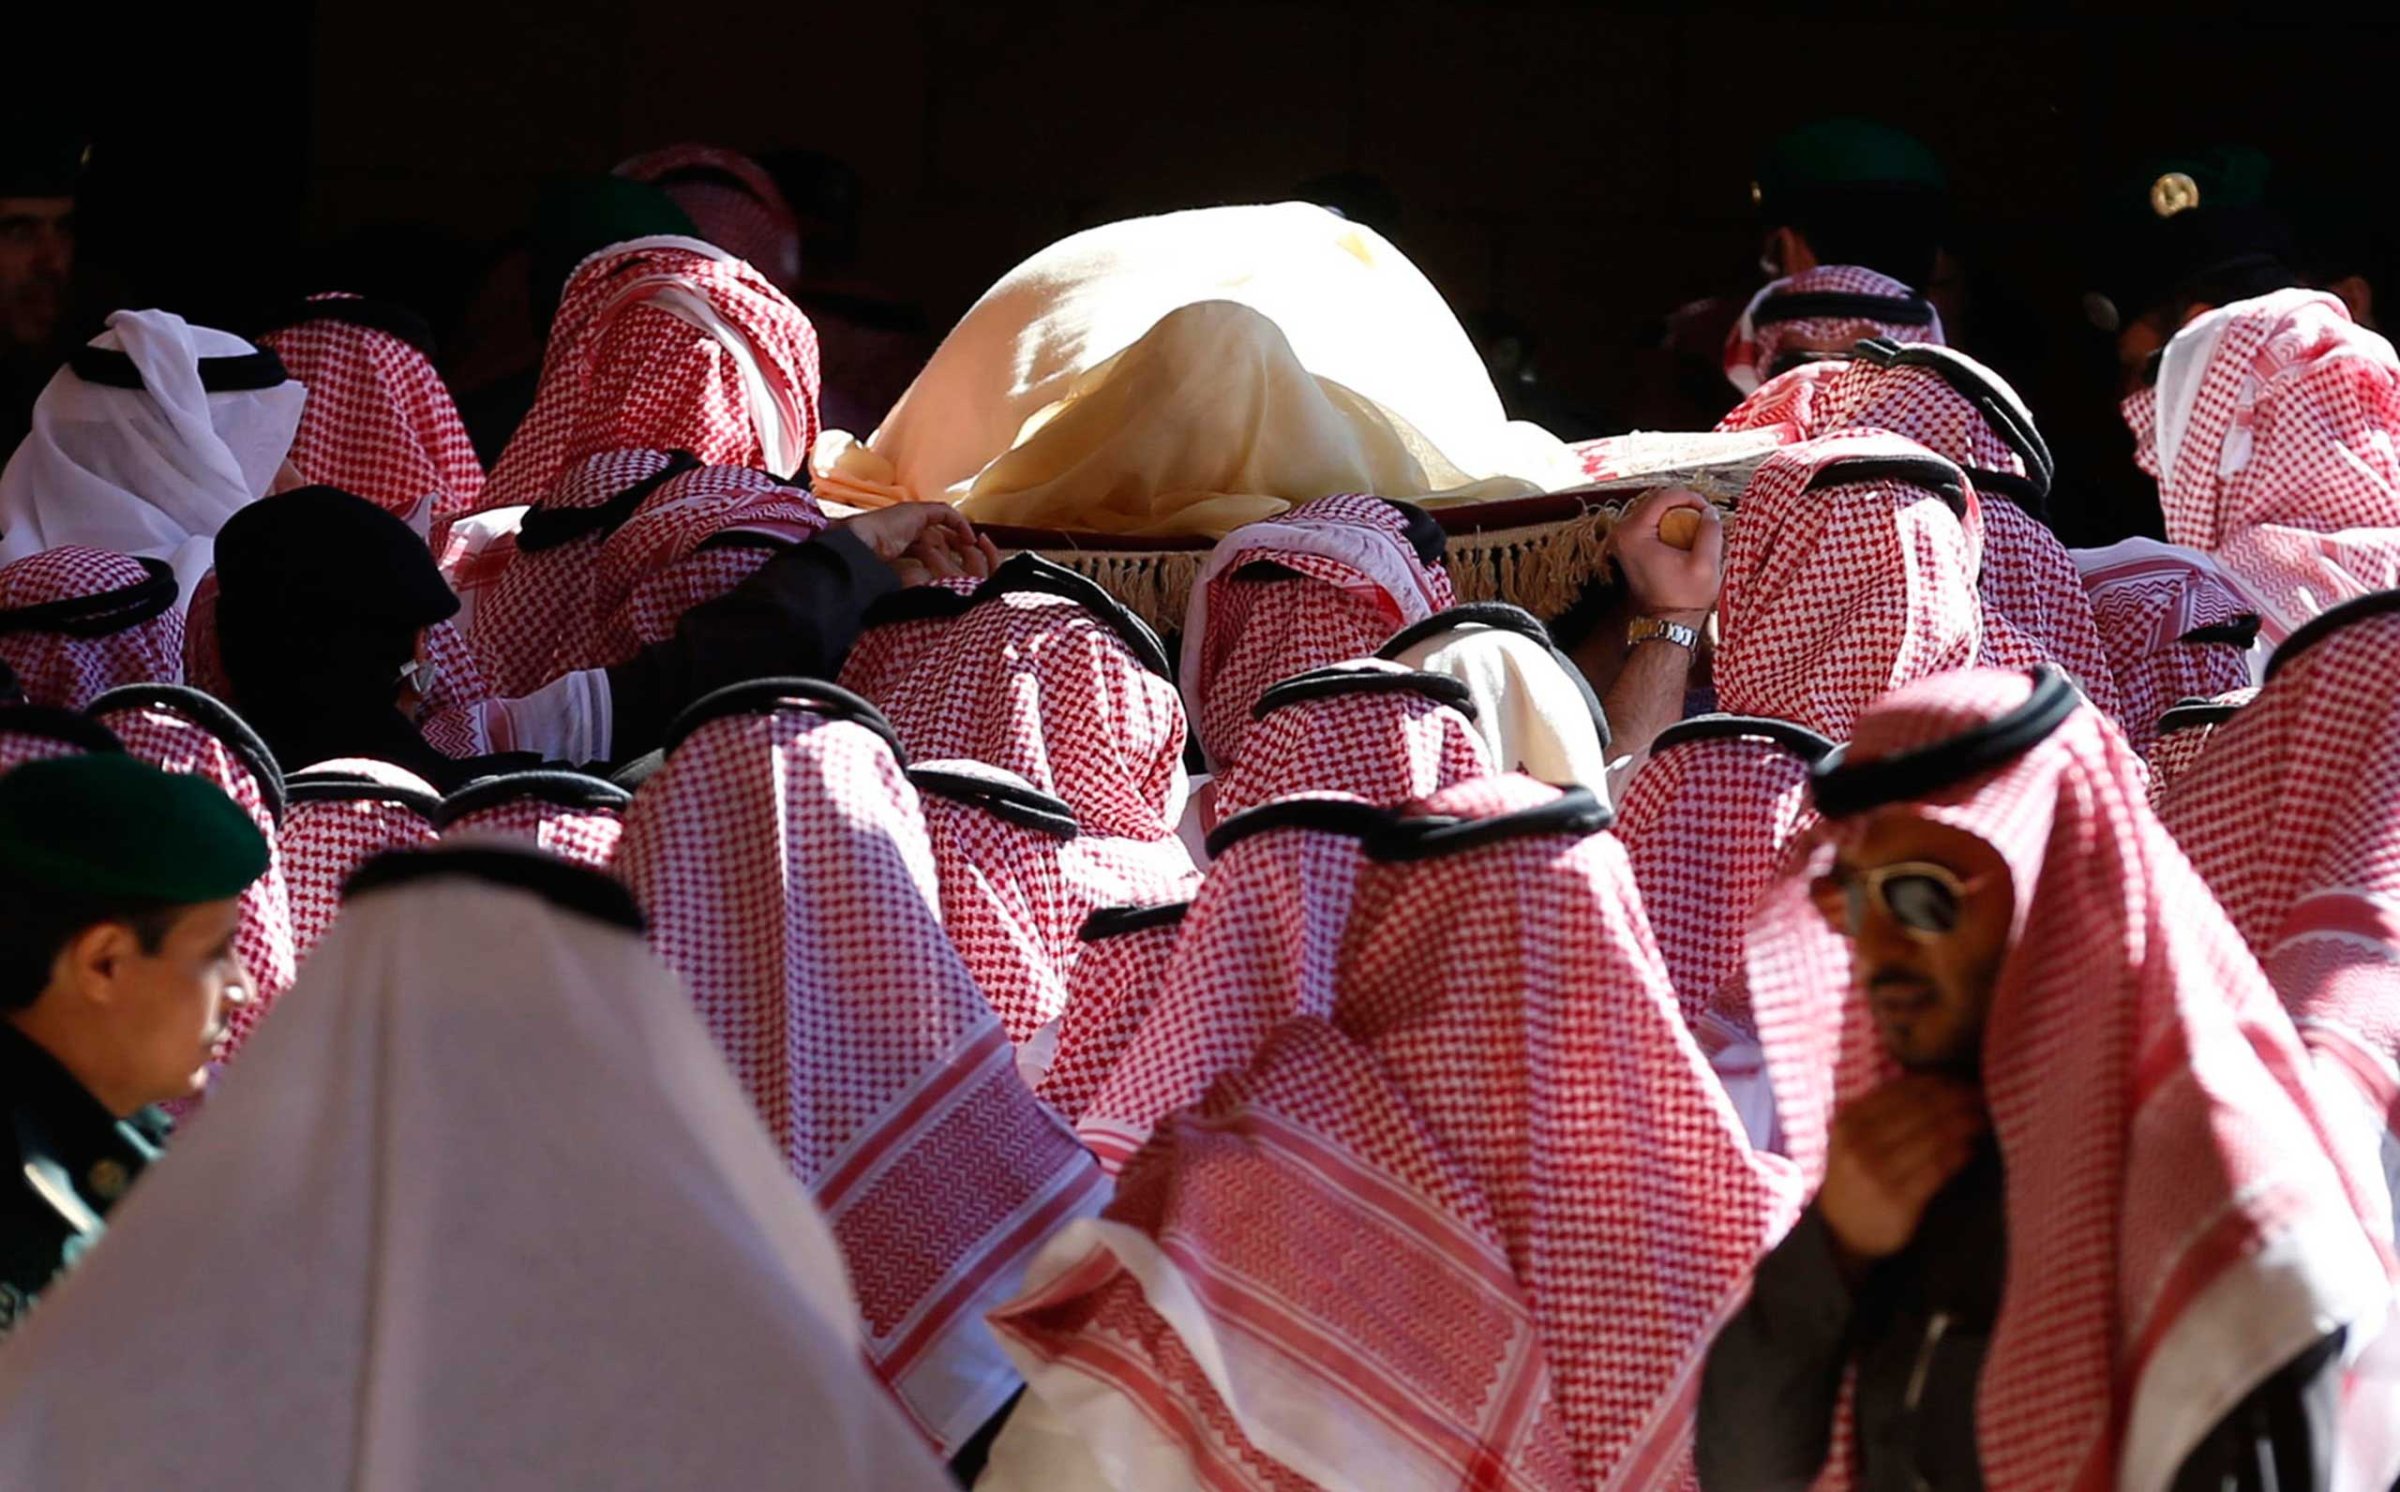 The body of Saudi King Abdullah bin Abdul Aziz is carried during his funeral at Imam Turki Bin Abdullah Grand Mosque, in Riyadh, Jan. 23, 2015.